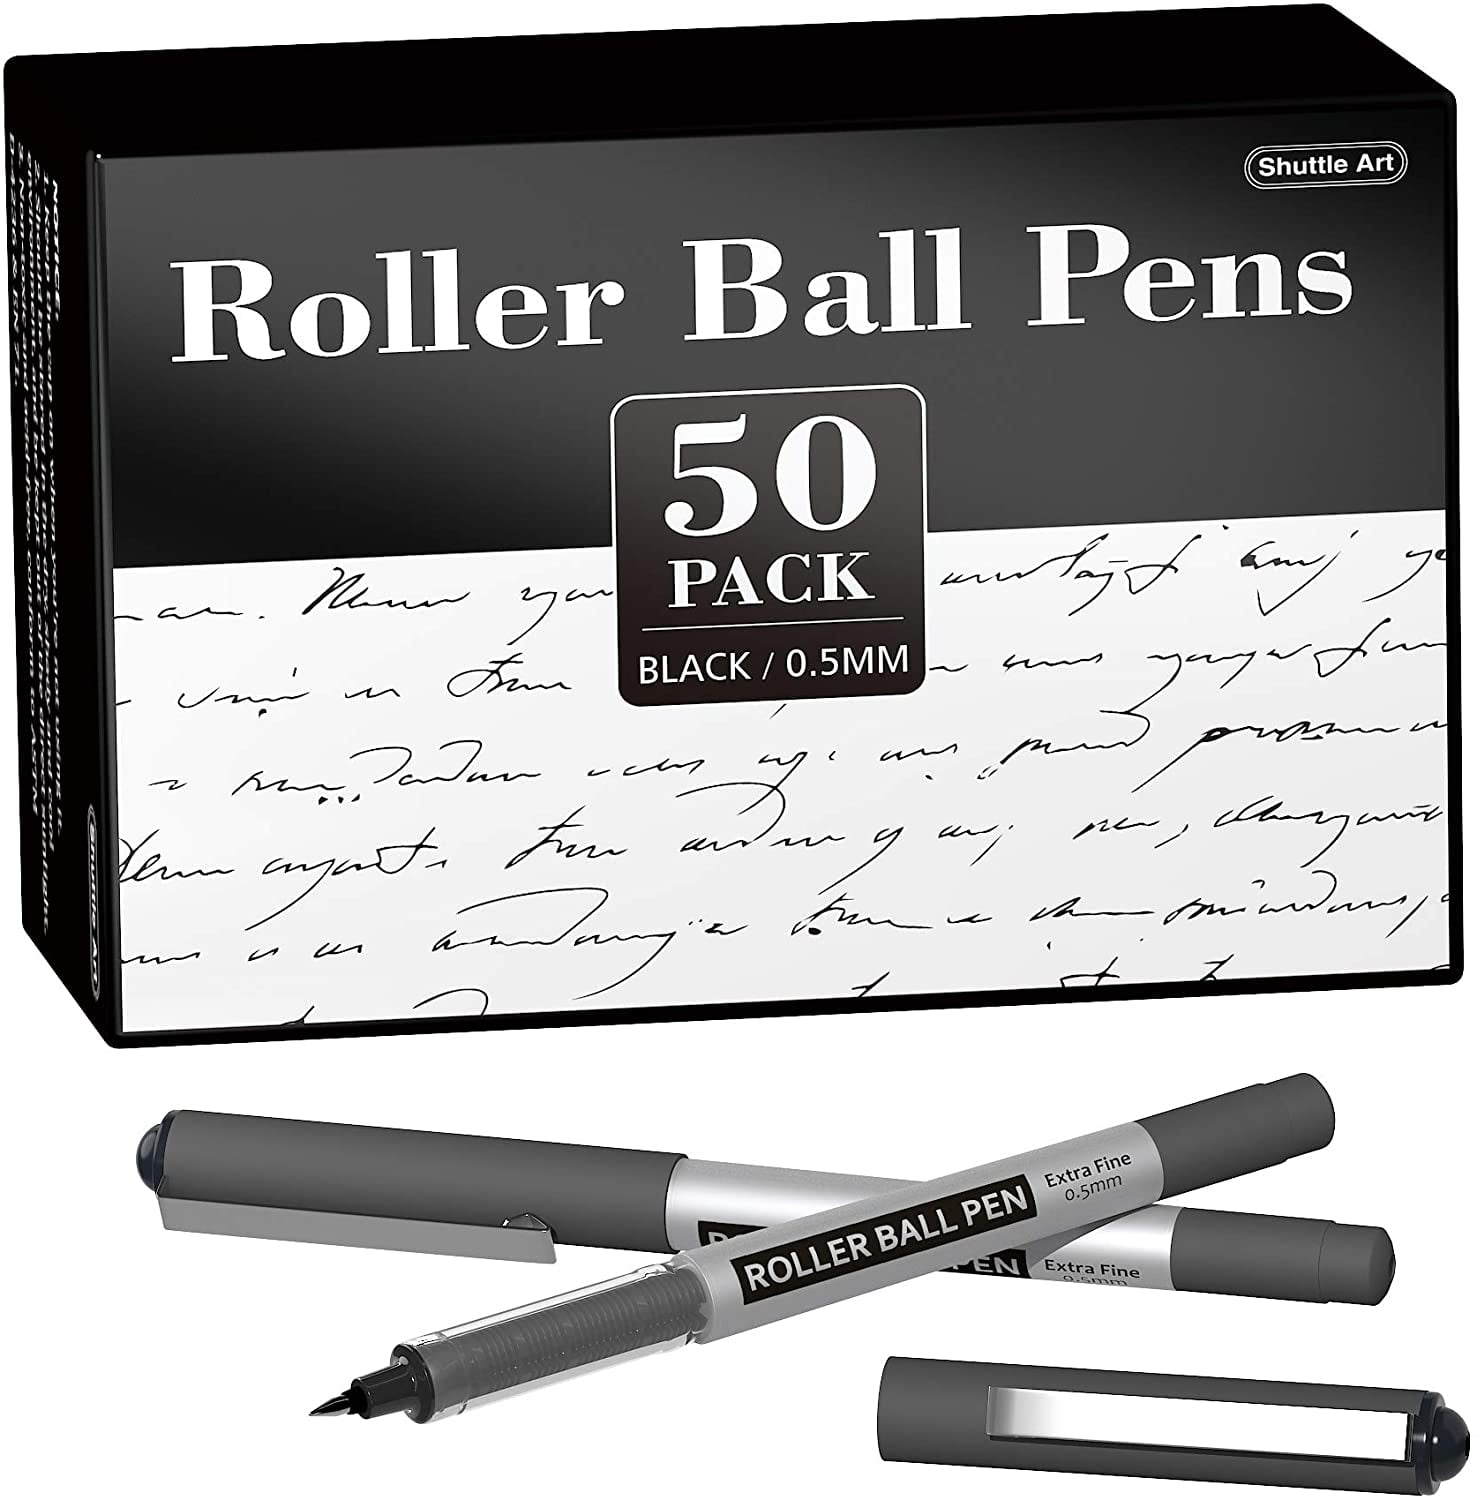 Pastel Retractable Gel Pens cute Pens Black Ink Pens - Temu